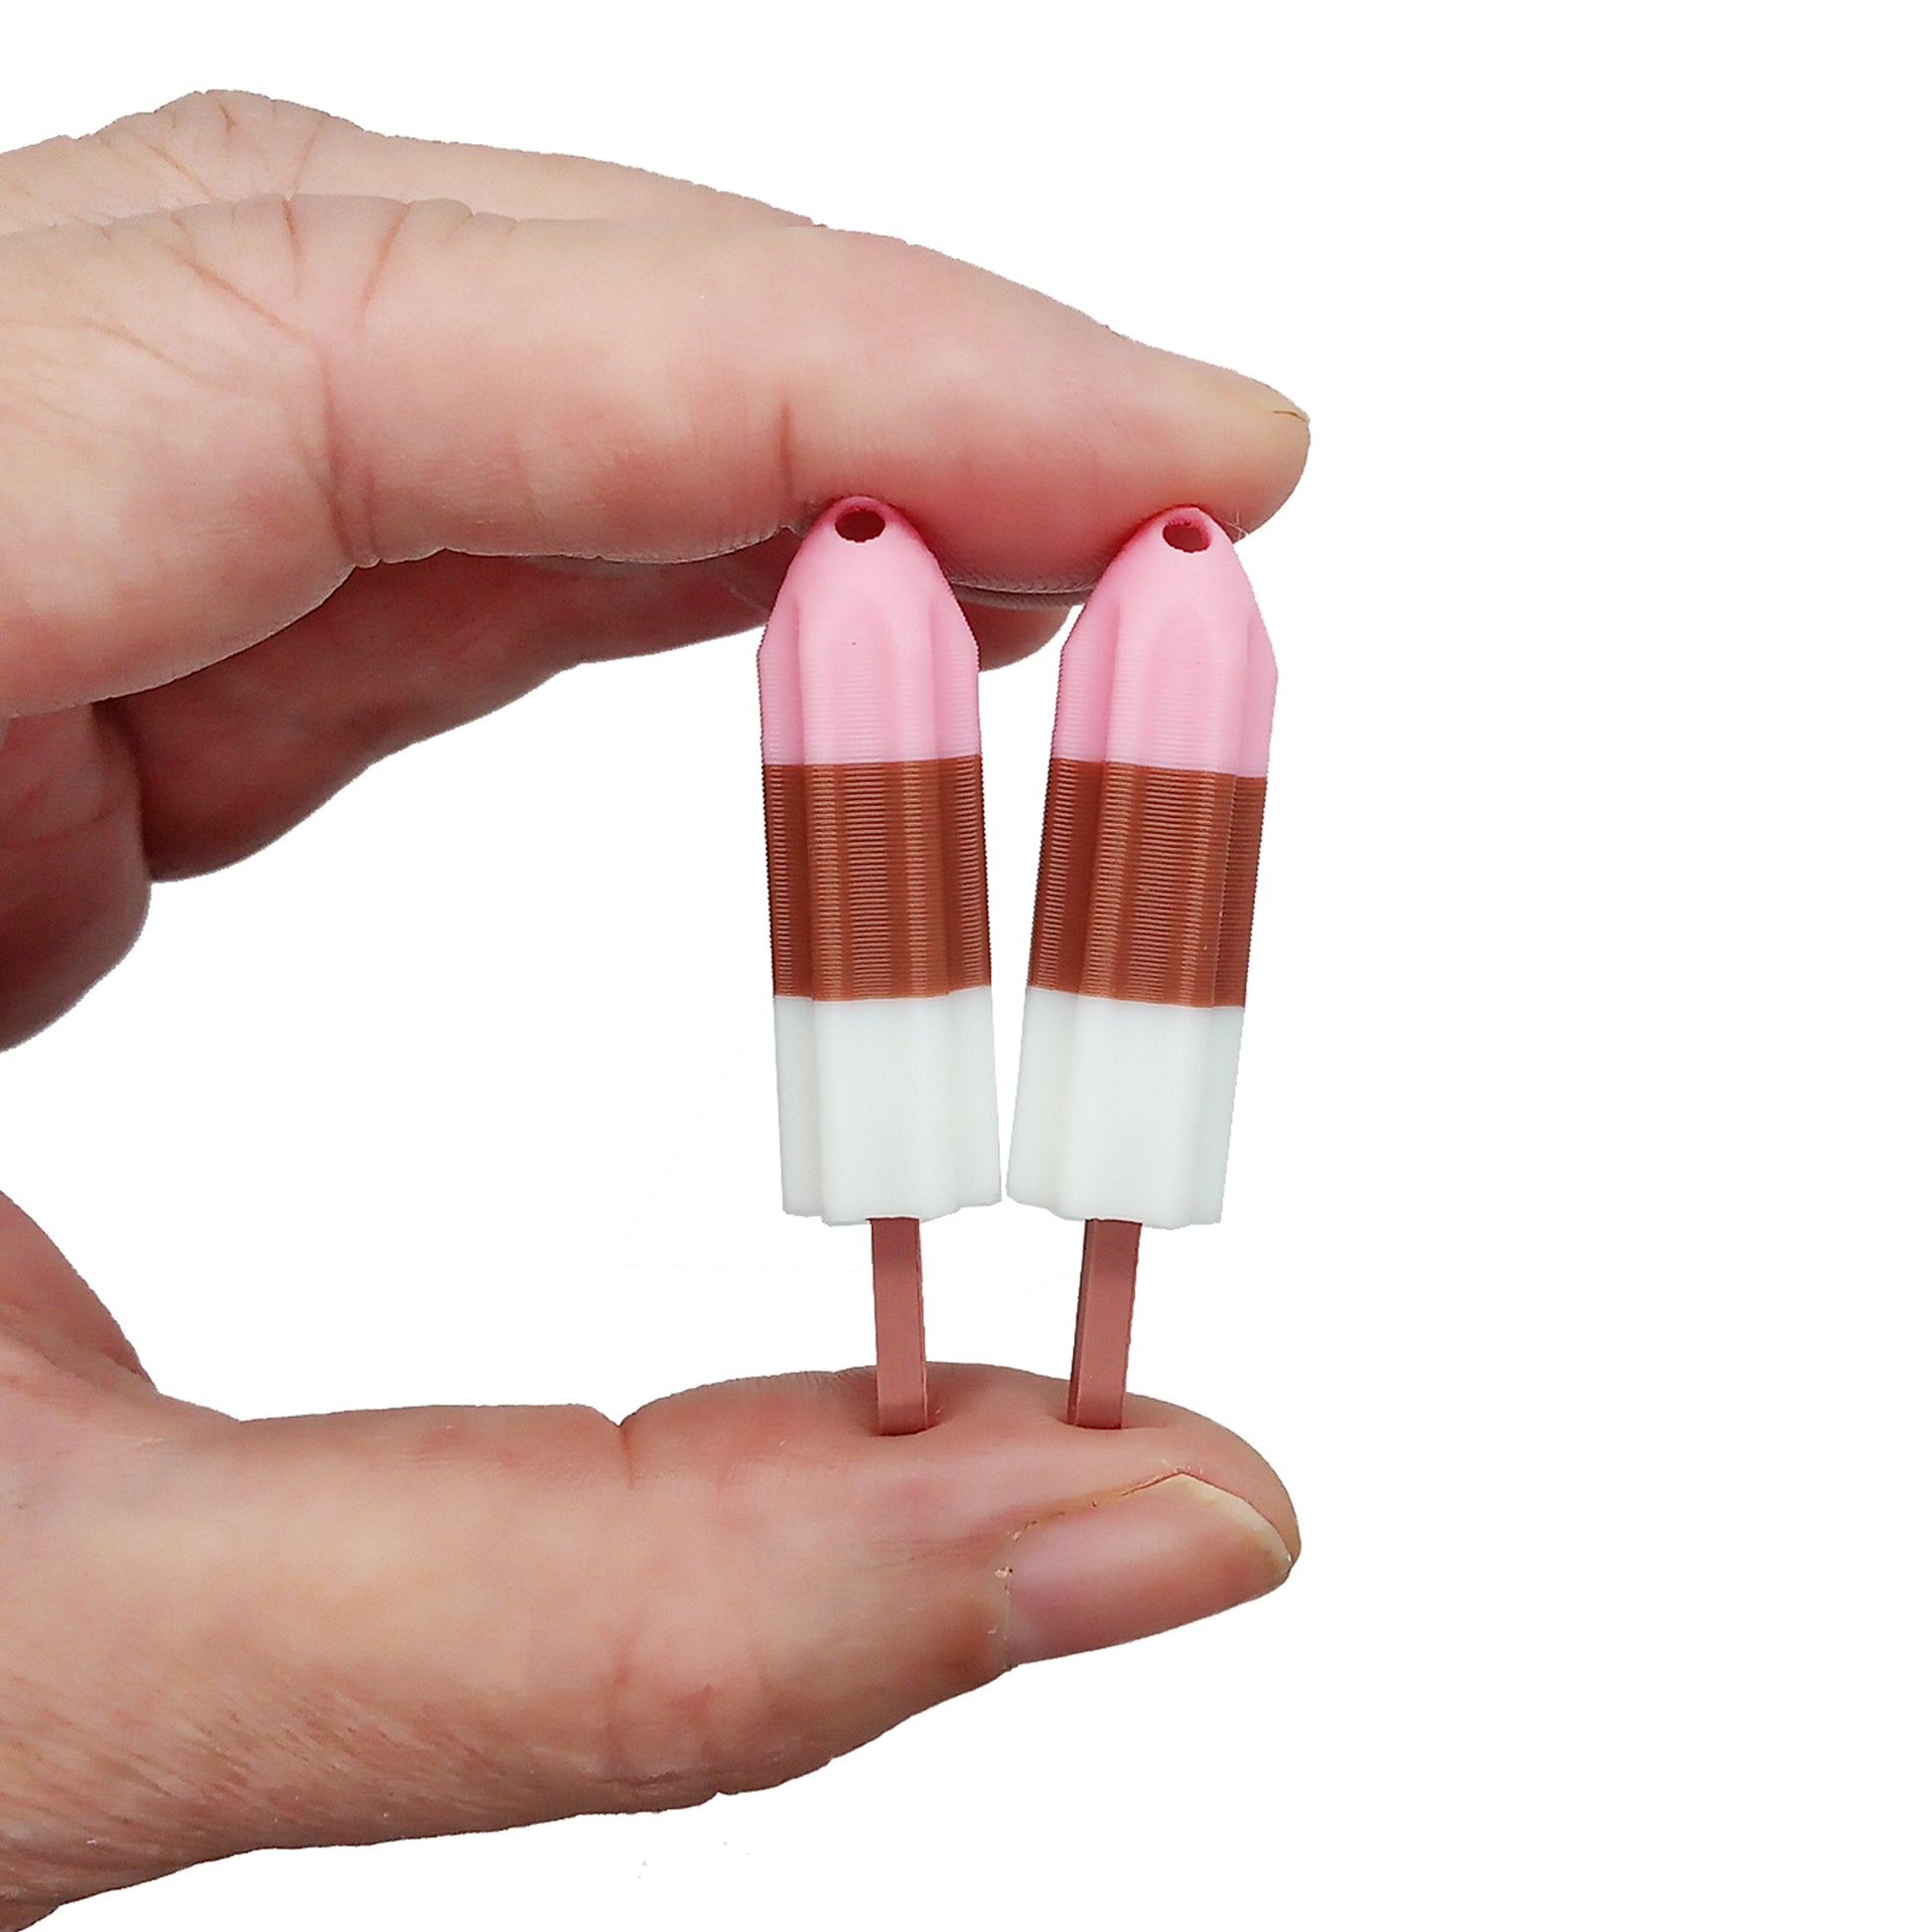 Adorable miniature freeze pop charms in Neopolitan ice cream colors.